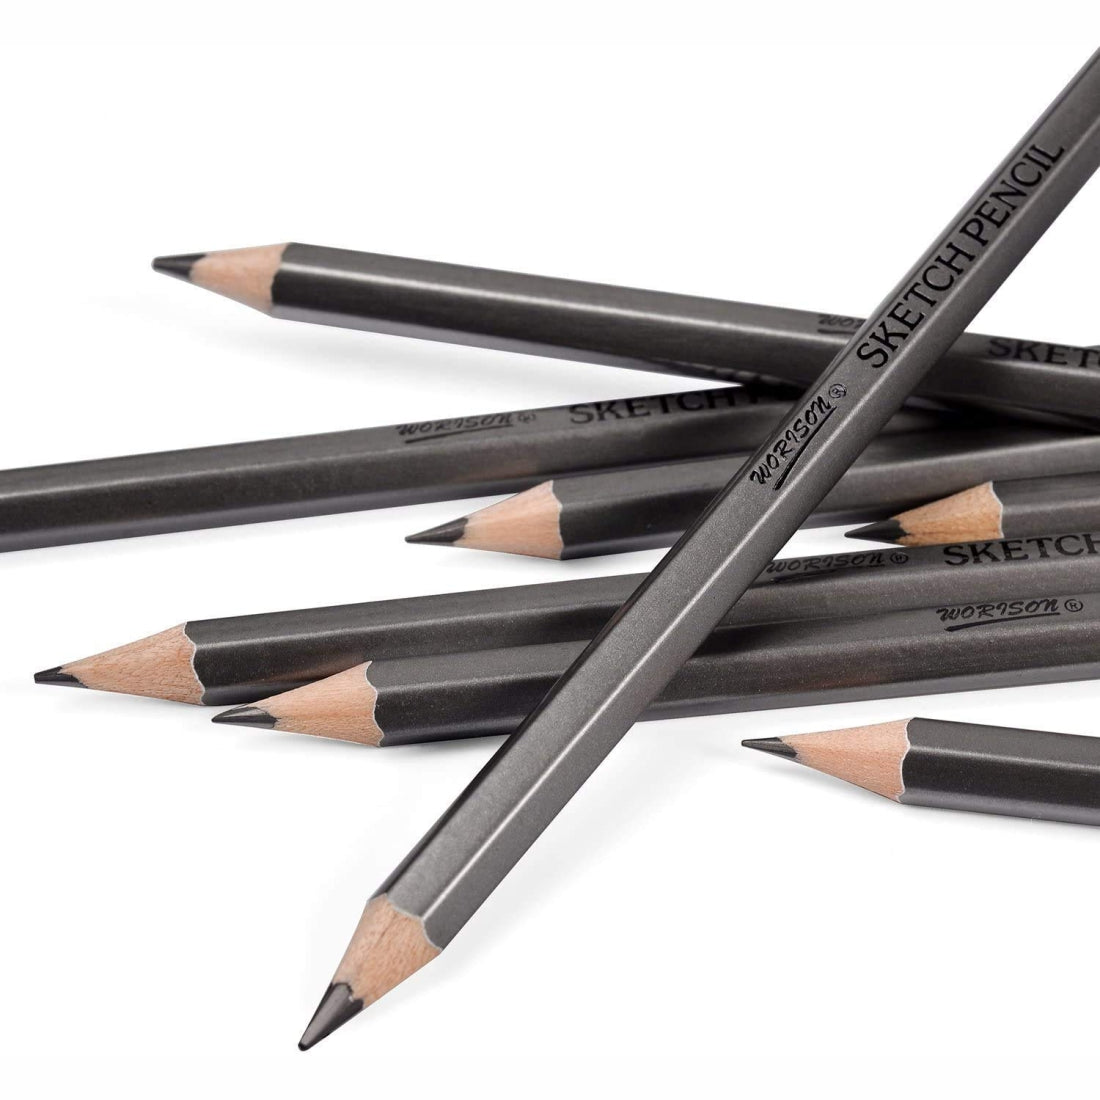 Worison Artist Grade Pencils - Set of 12